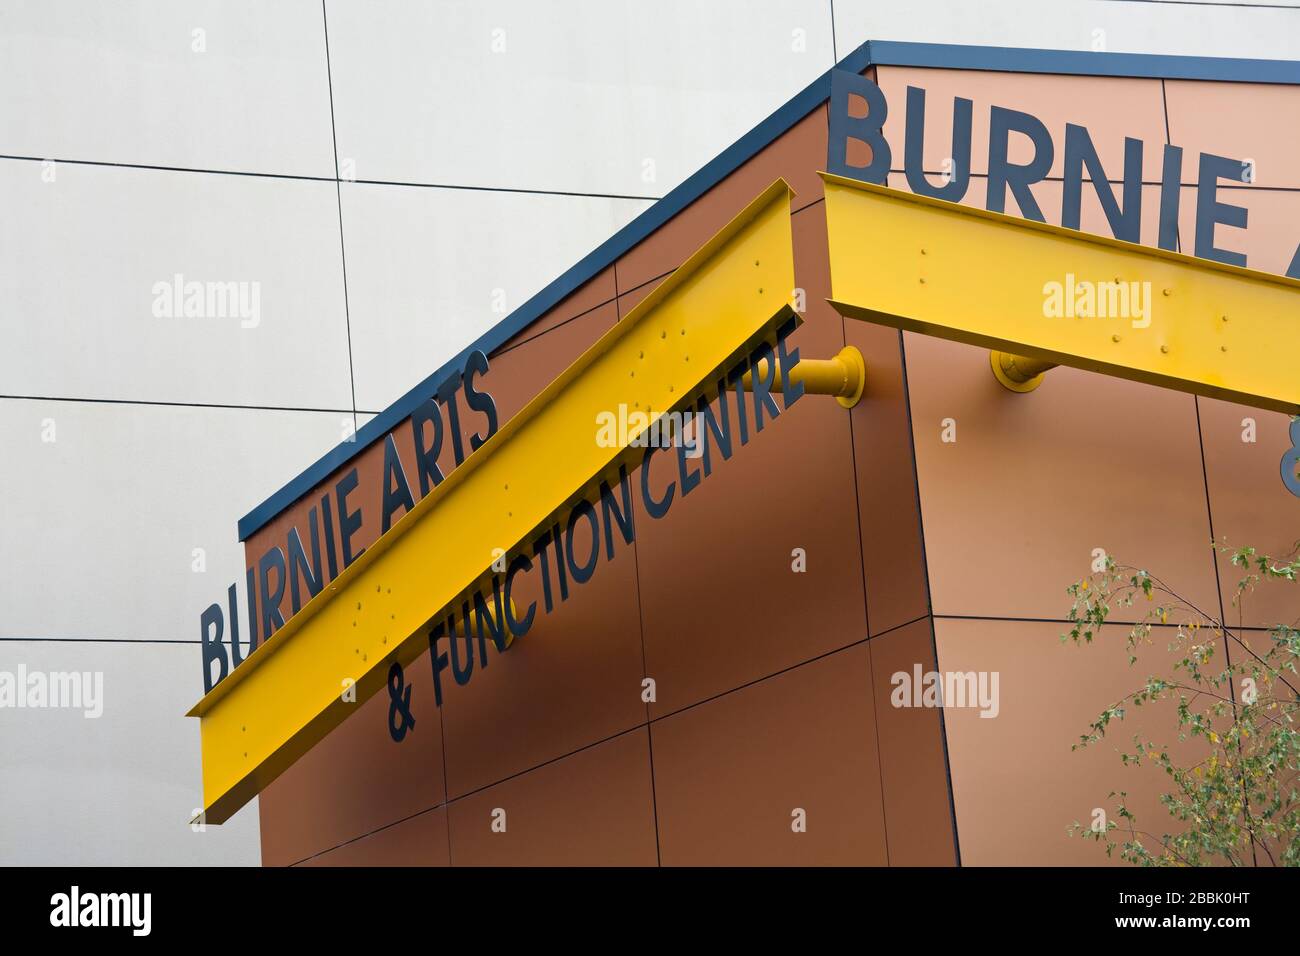 Burnie Arts & Function Center, Central Business District, Burnie City, Tasmania, Australia Foto Stock